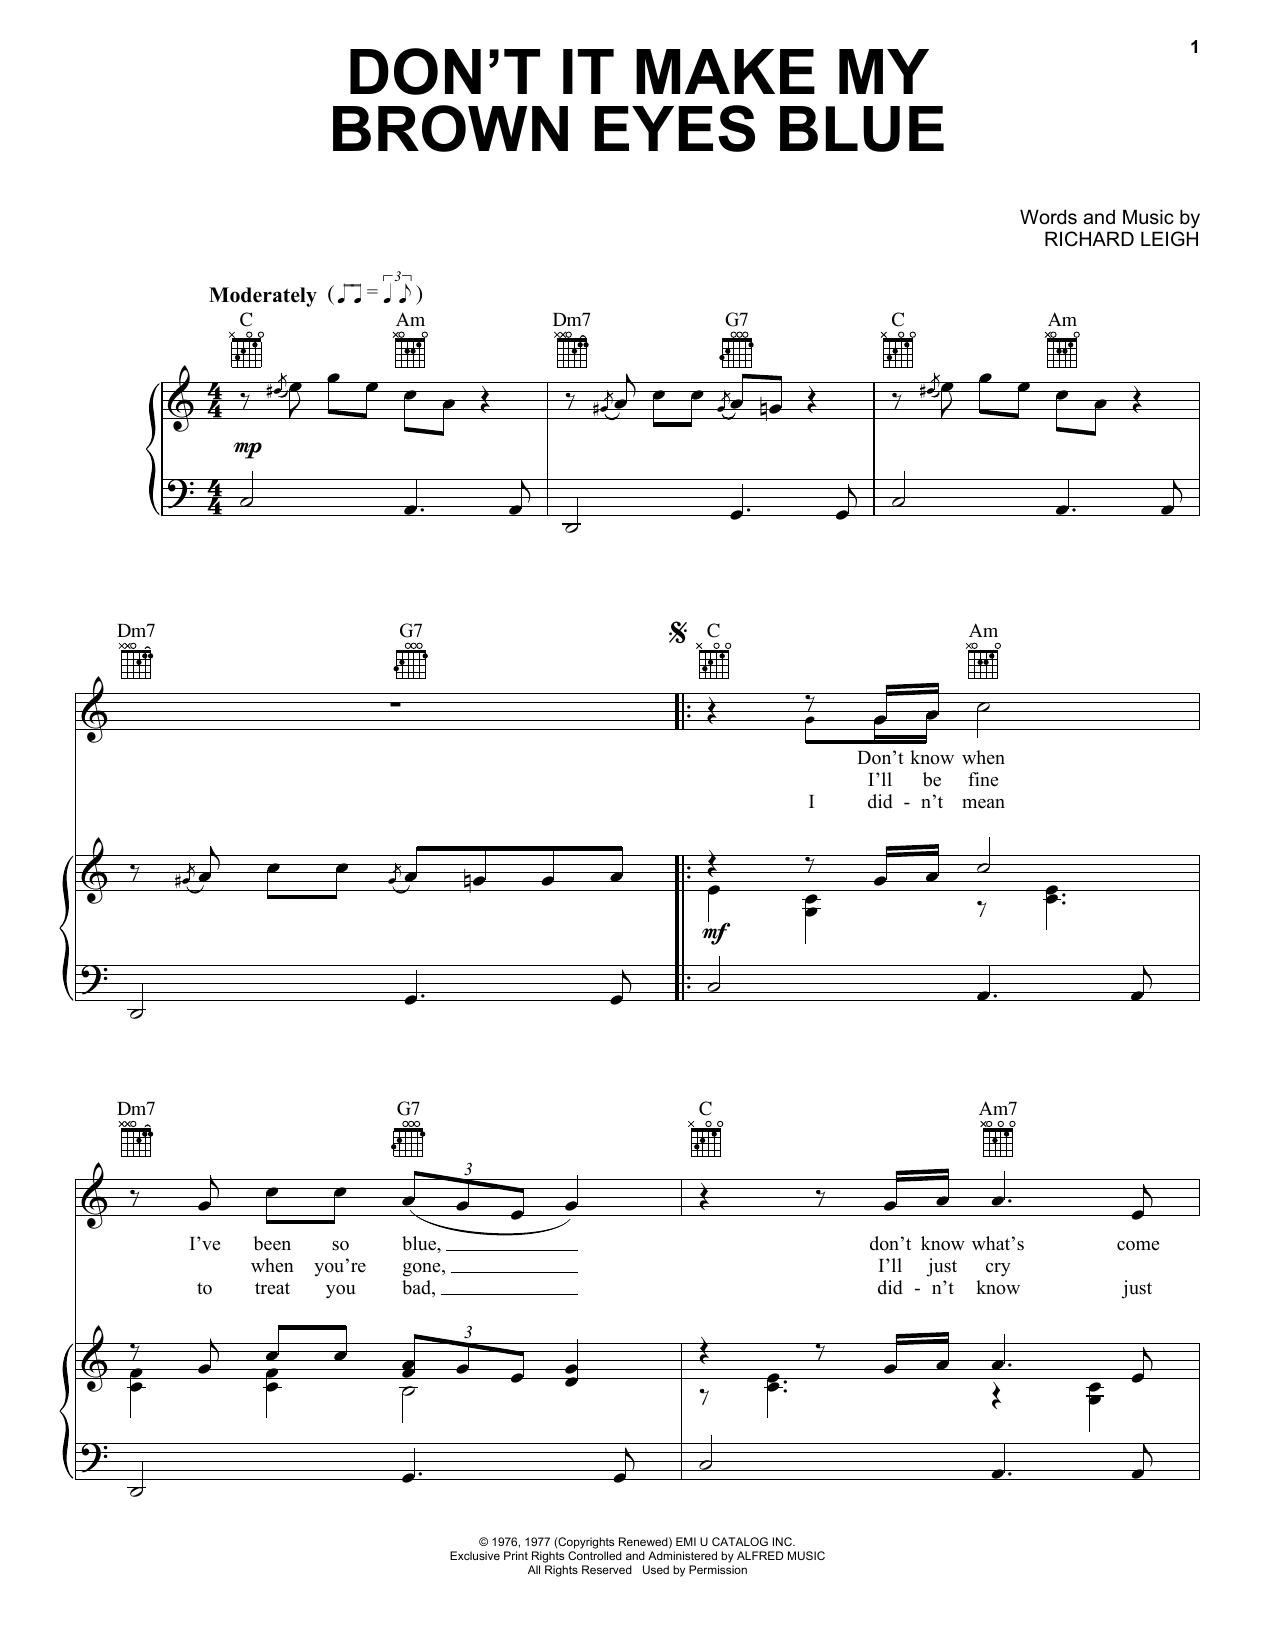 Crystal Gayle Don't It Make My Brown Eyes Blue Sheet Music Notes & Chords for Baritone Ukulele - Download or Print PDF